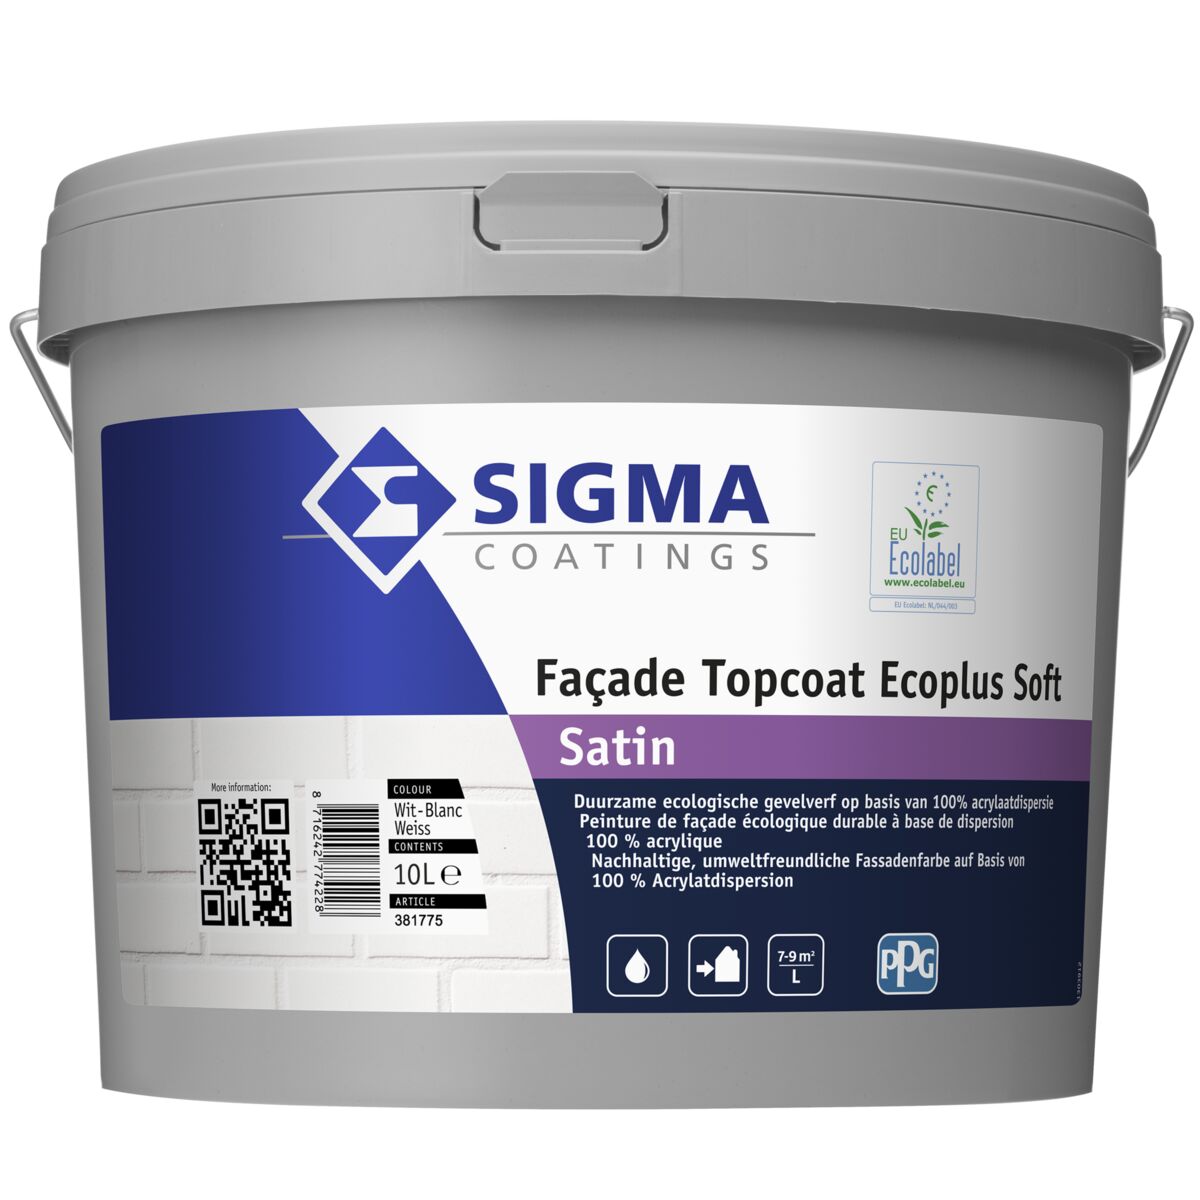 Sigma Façade Topcoat Ecoplus Soft Satin <br><FONT size="4">voorheen Sigma Façade Ecoplus Soft</FONT>